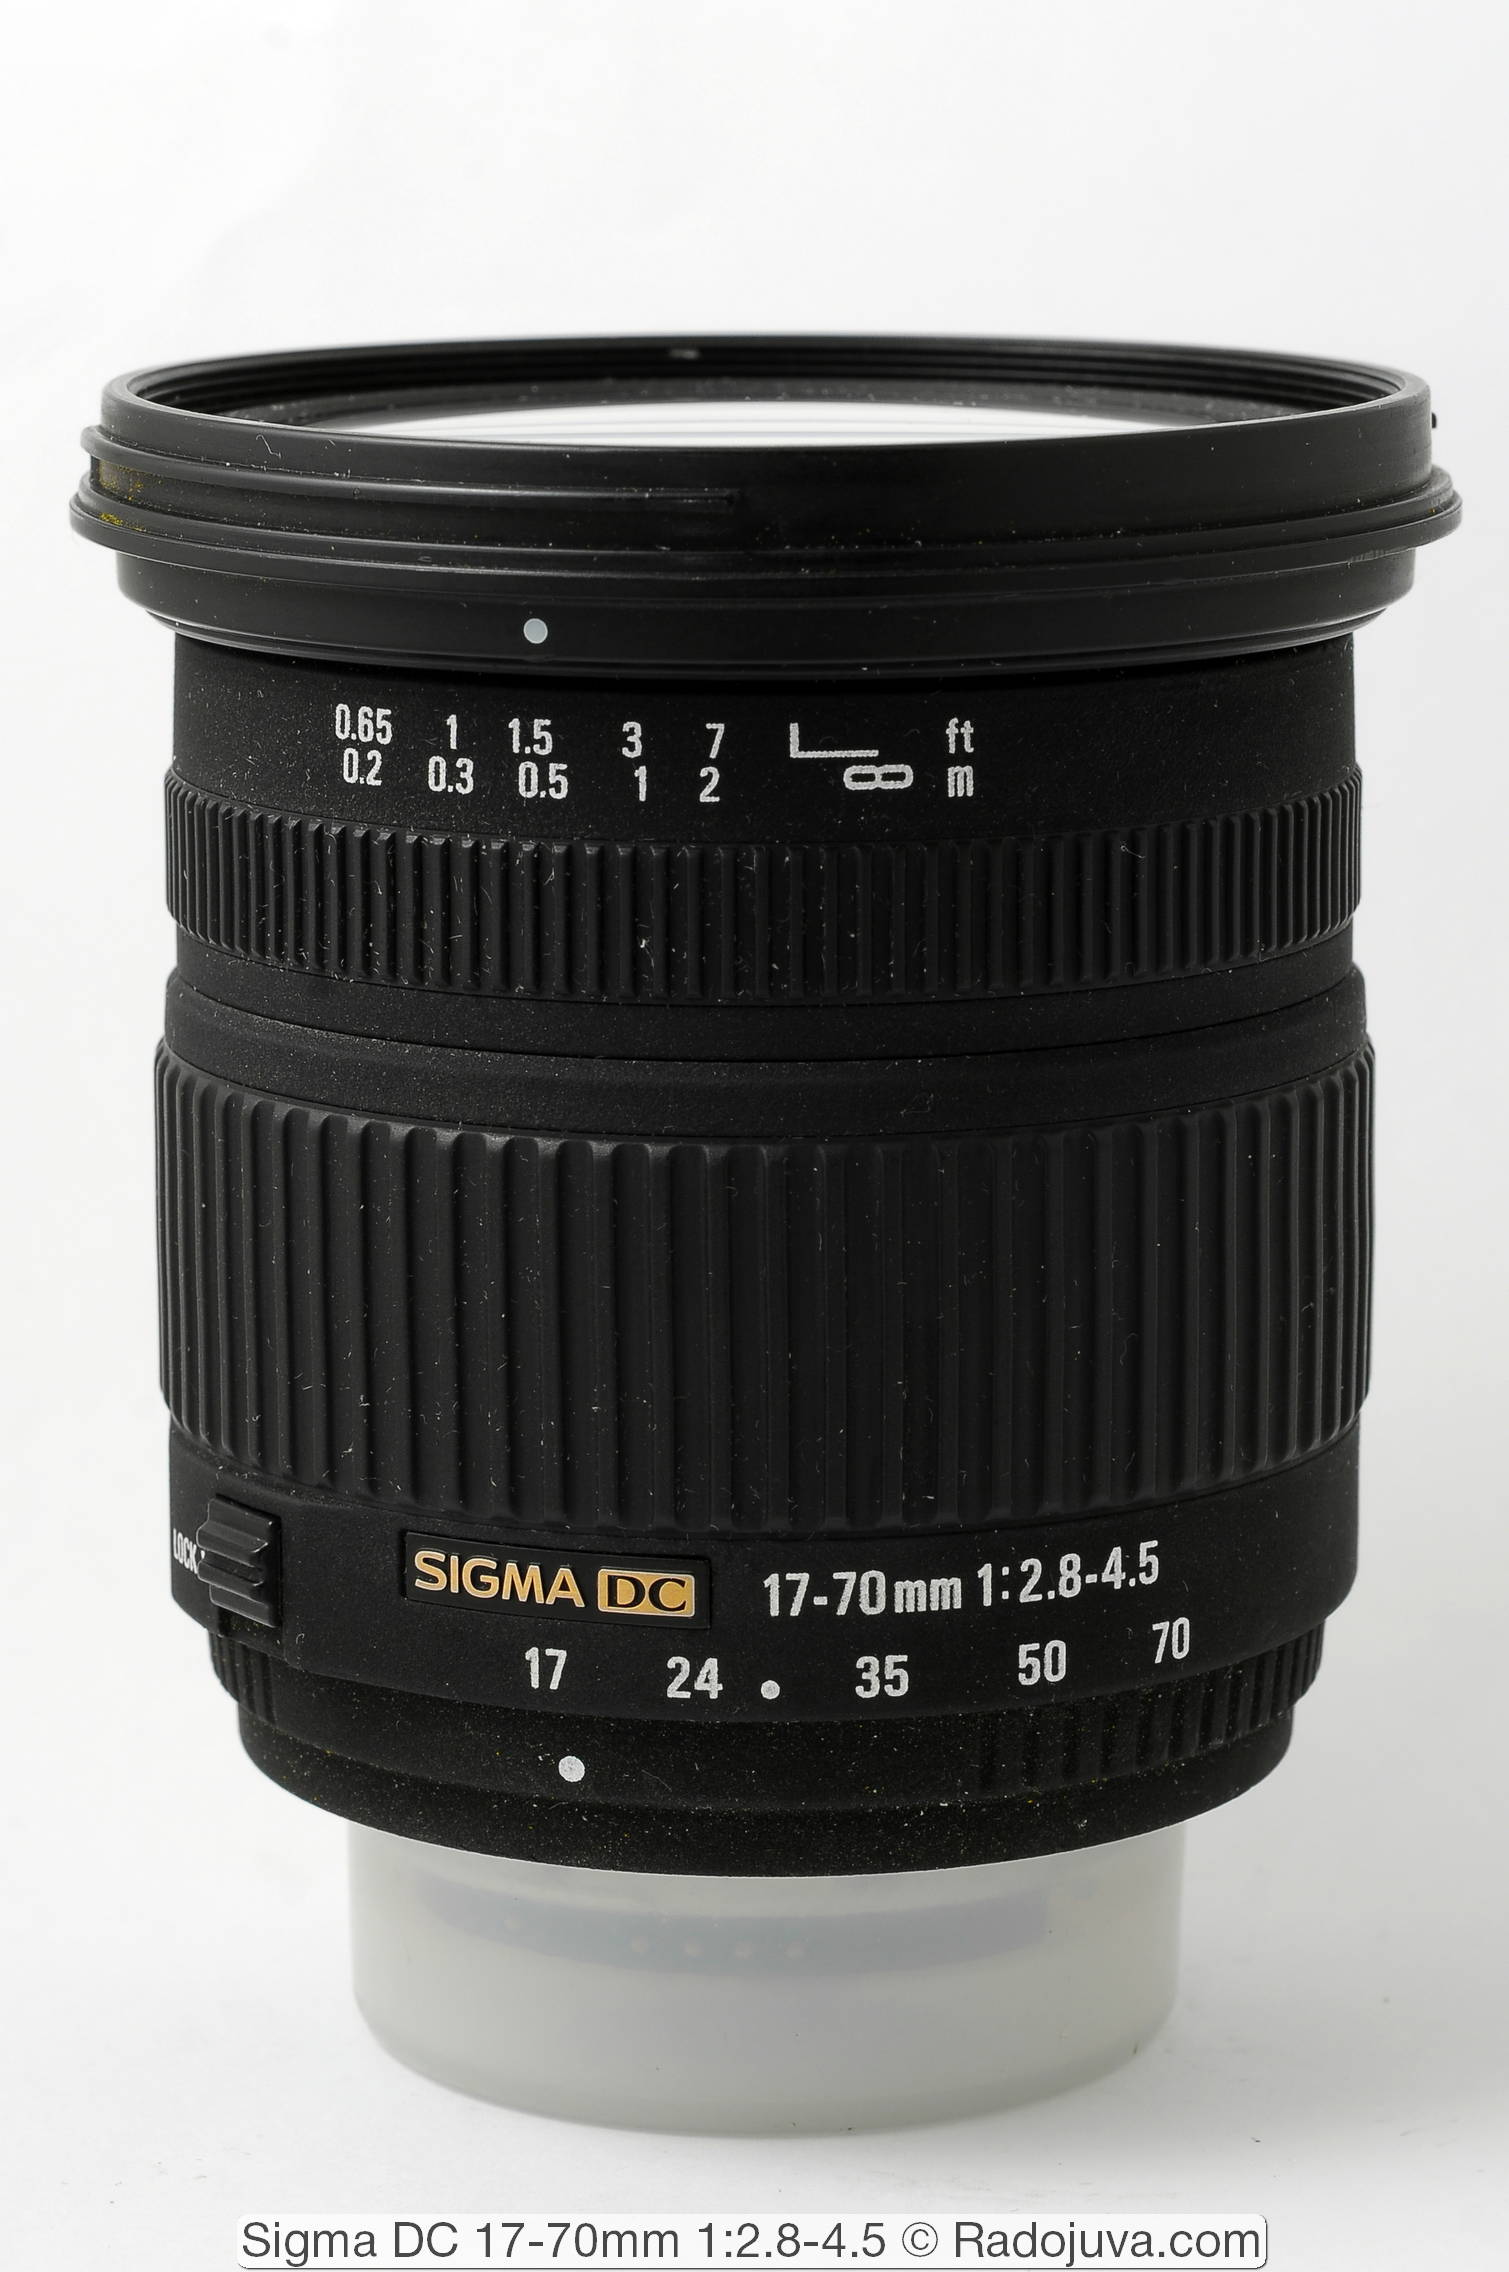 Sigma DC 17-70mm 1: 2.8-4.5